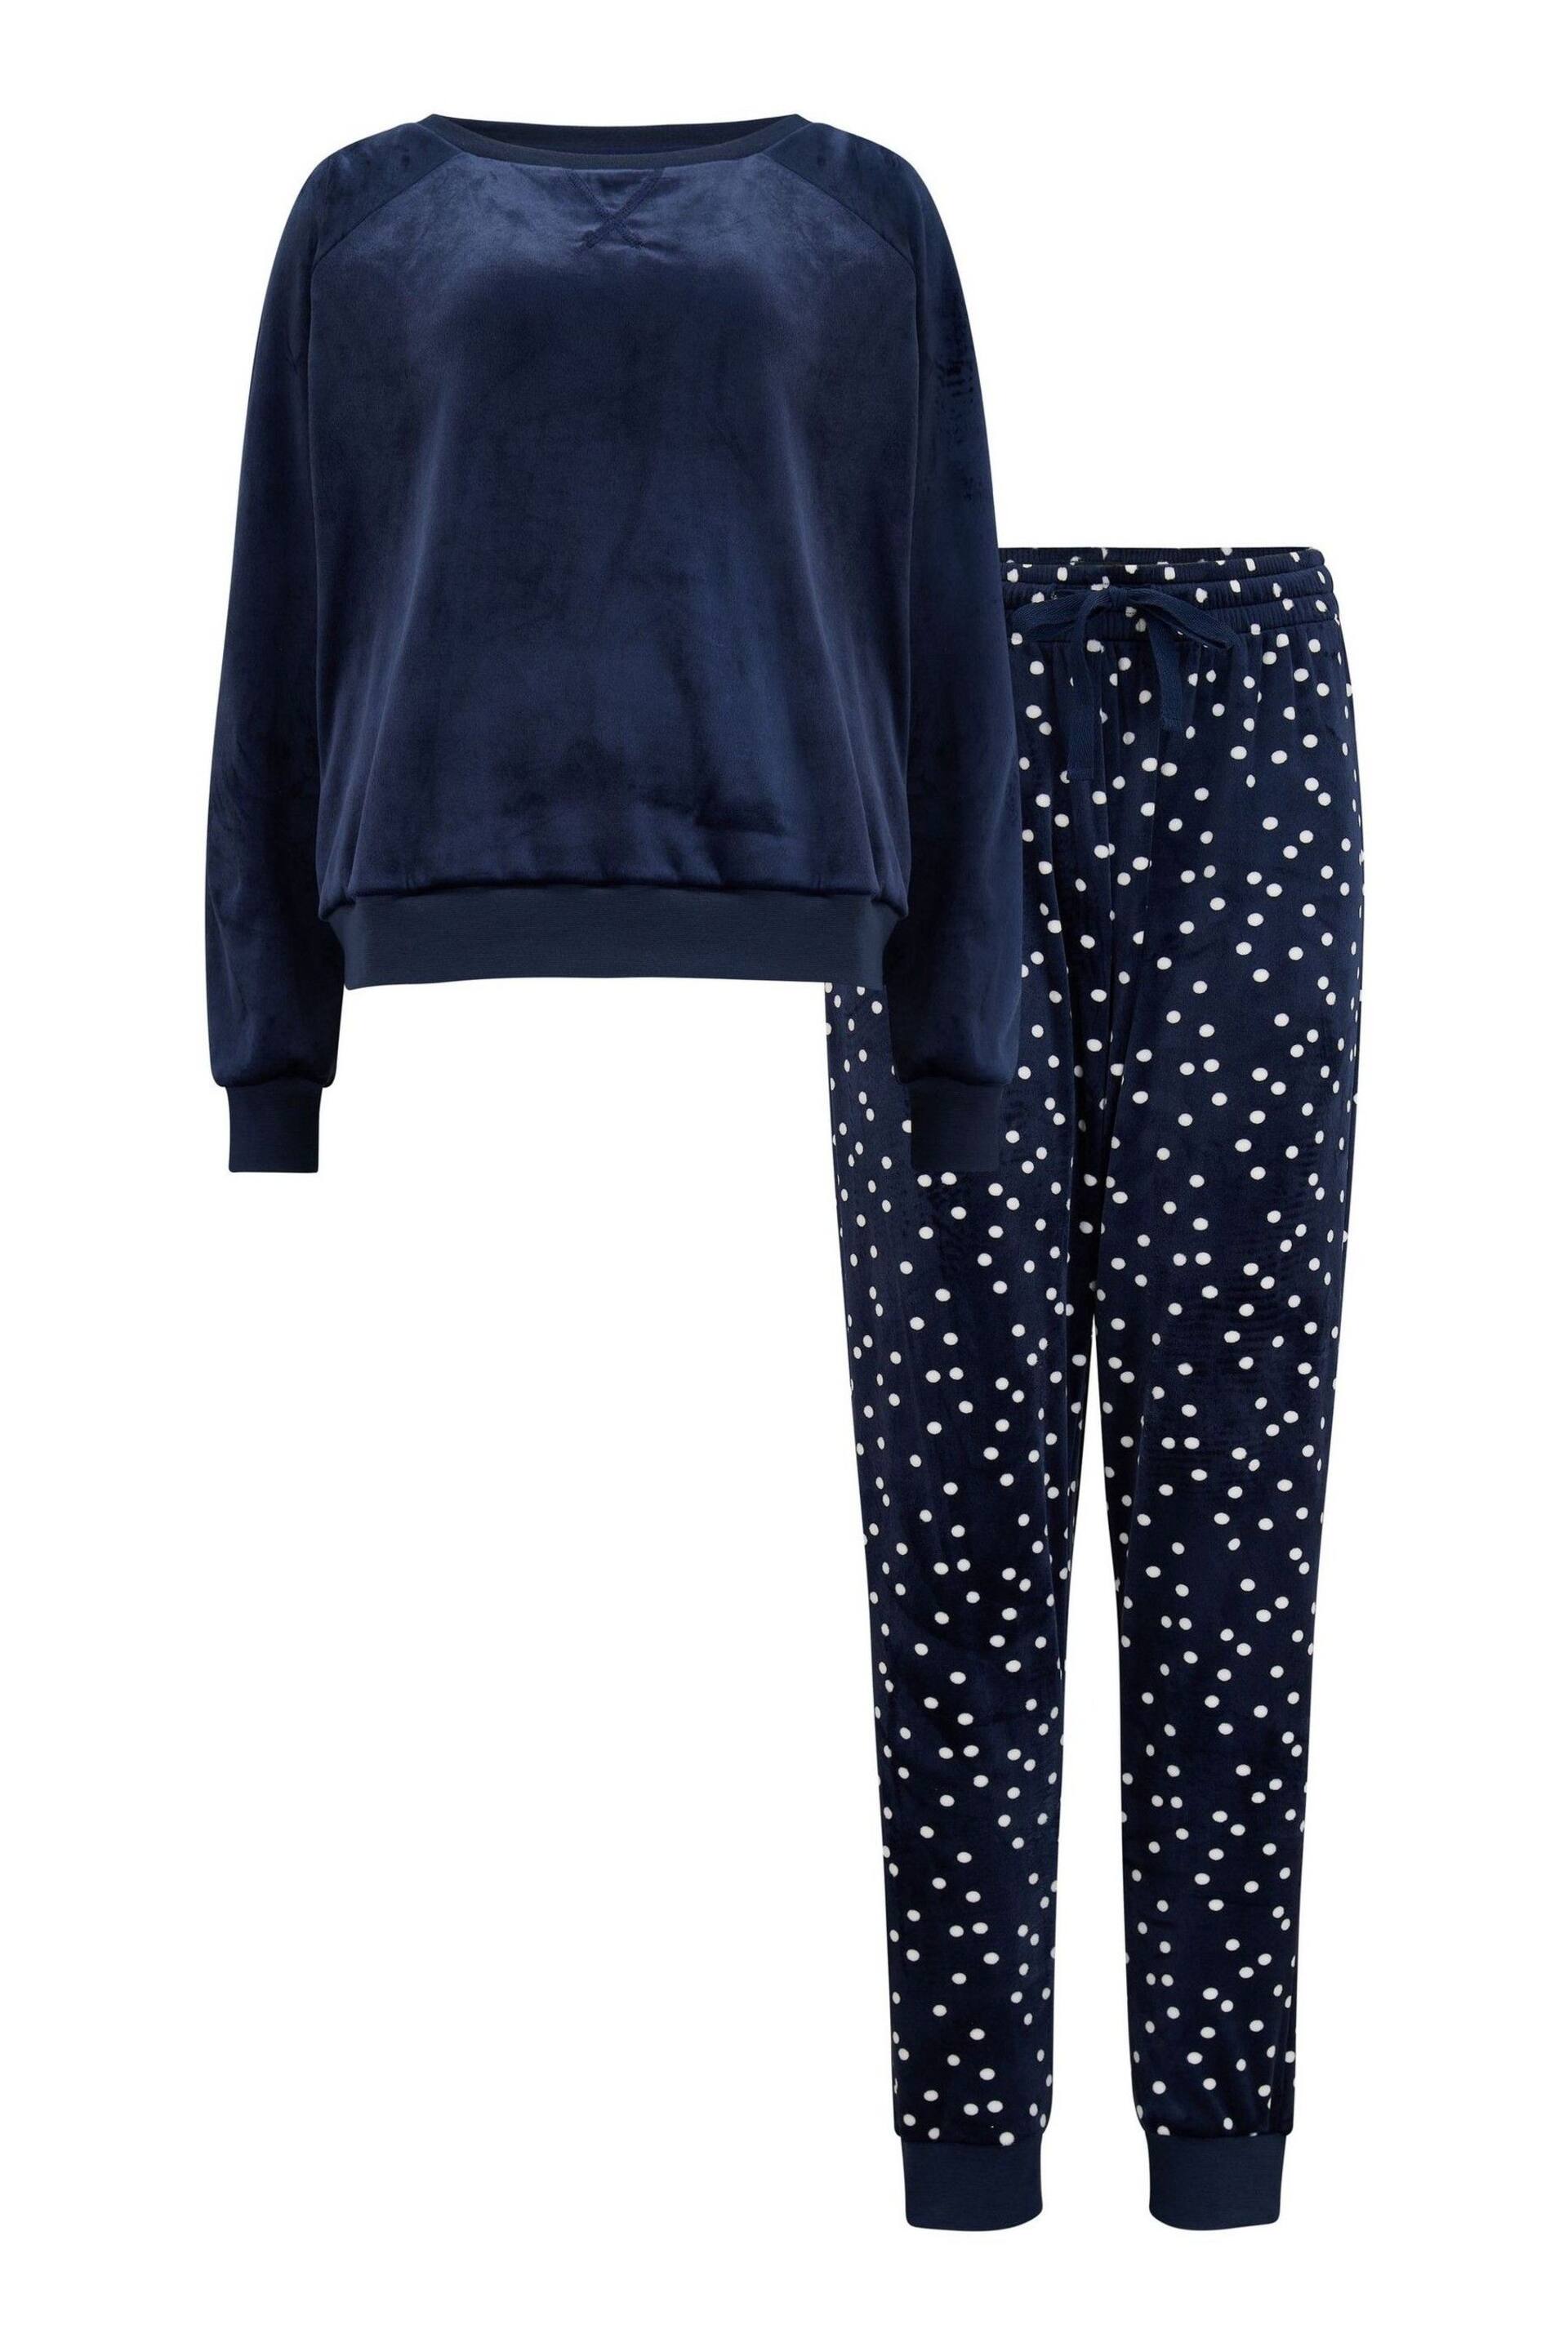 Pour Moi Blue Cosy Fleece Sweatshirt and Jogger Pyjama Set - Image 4 of 4